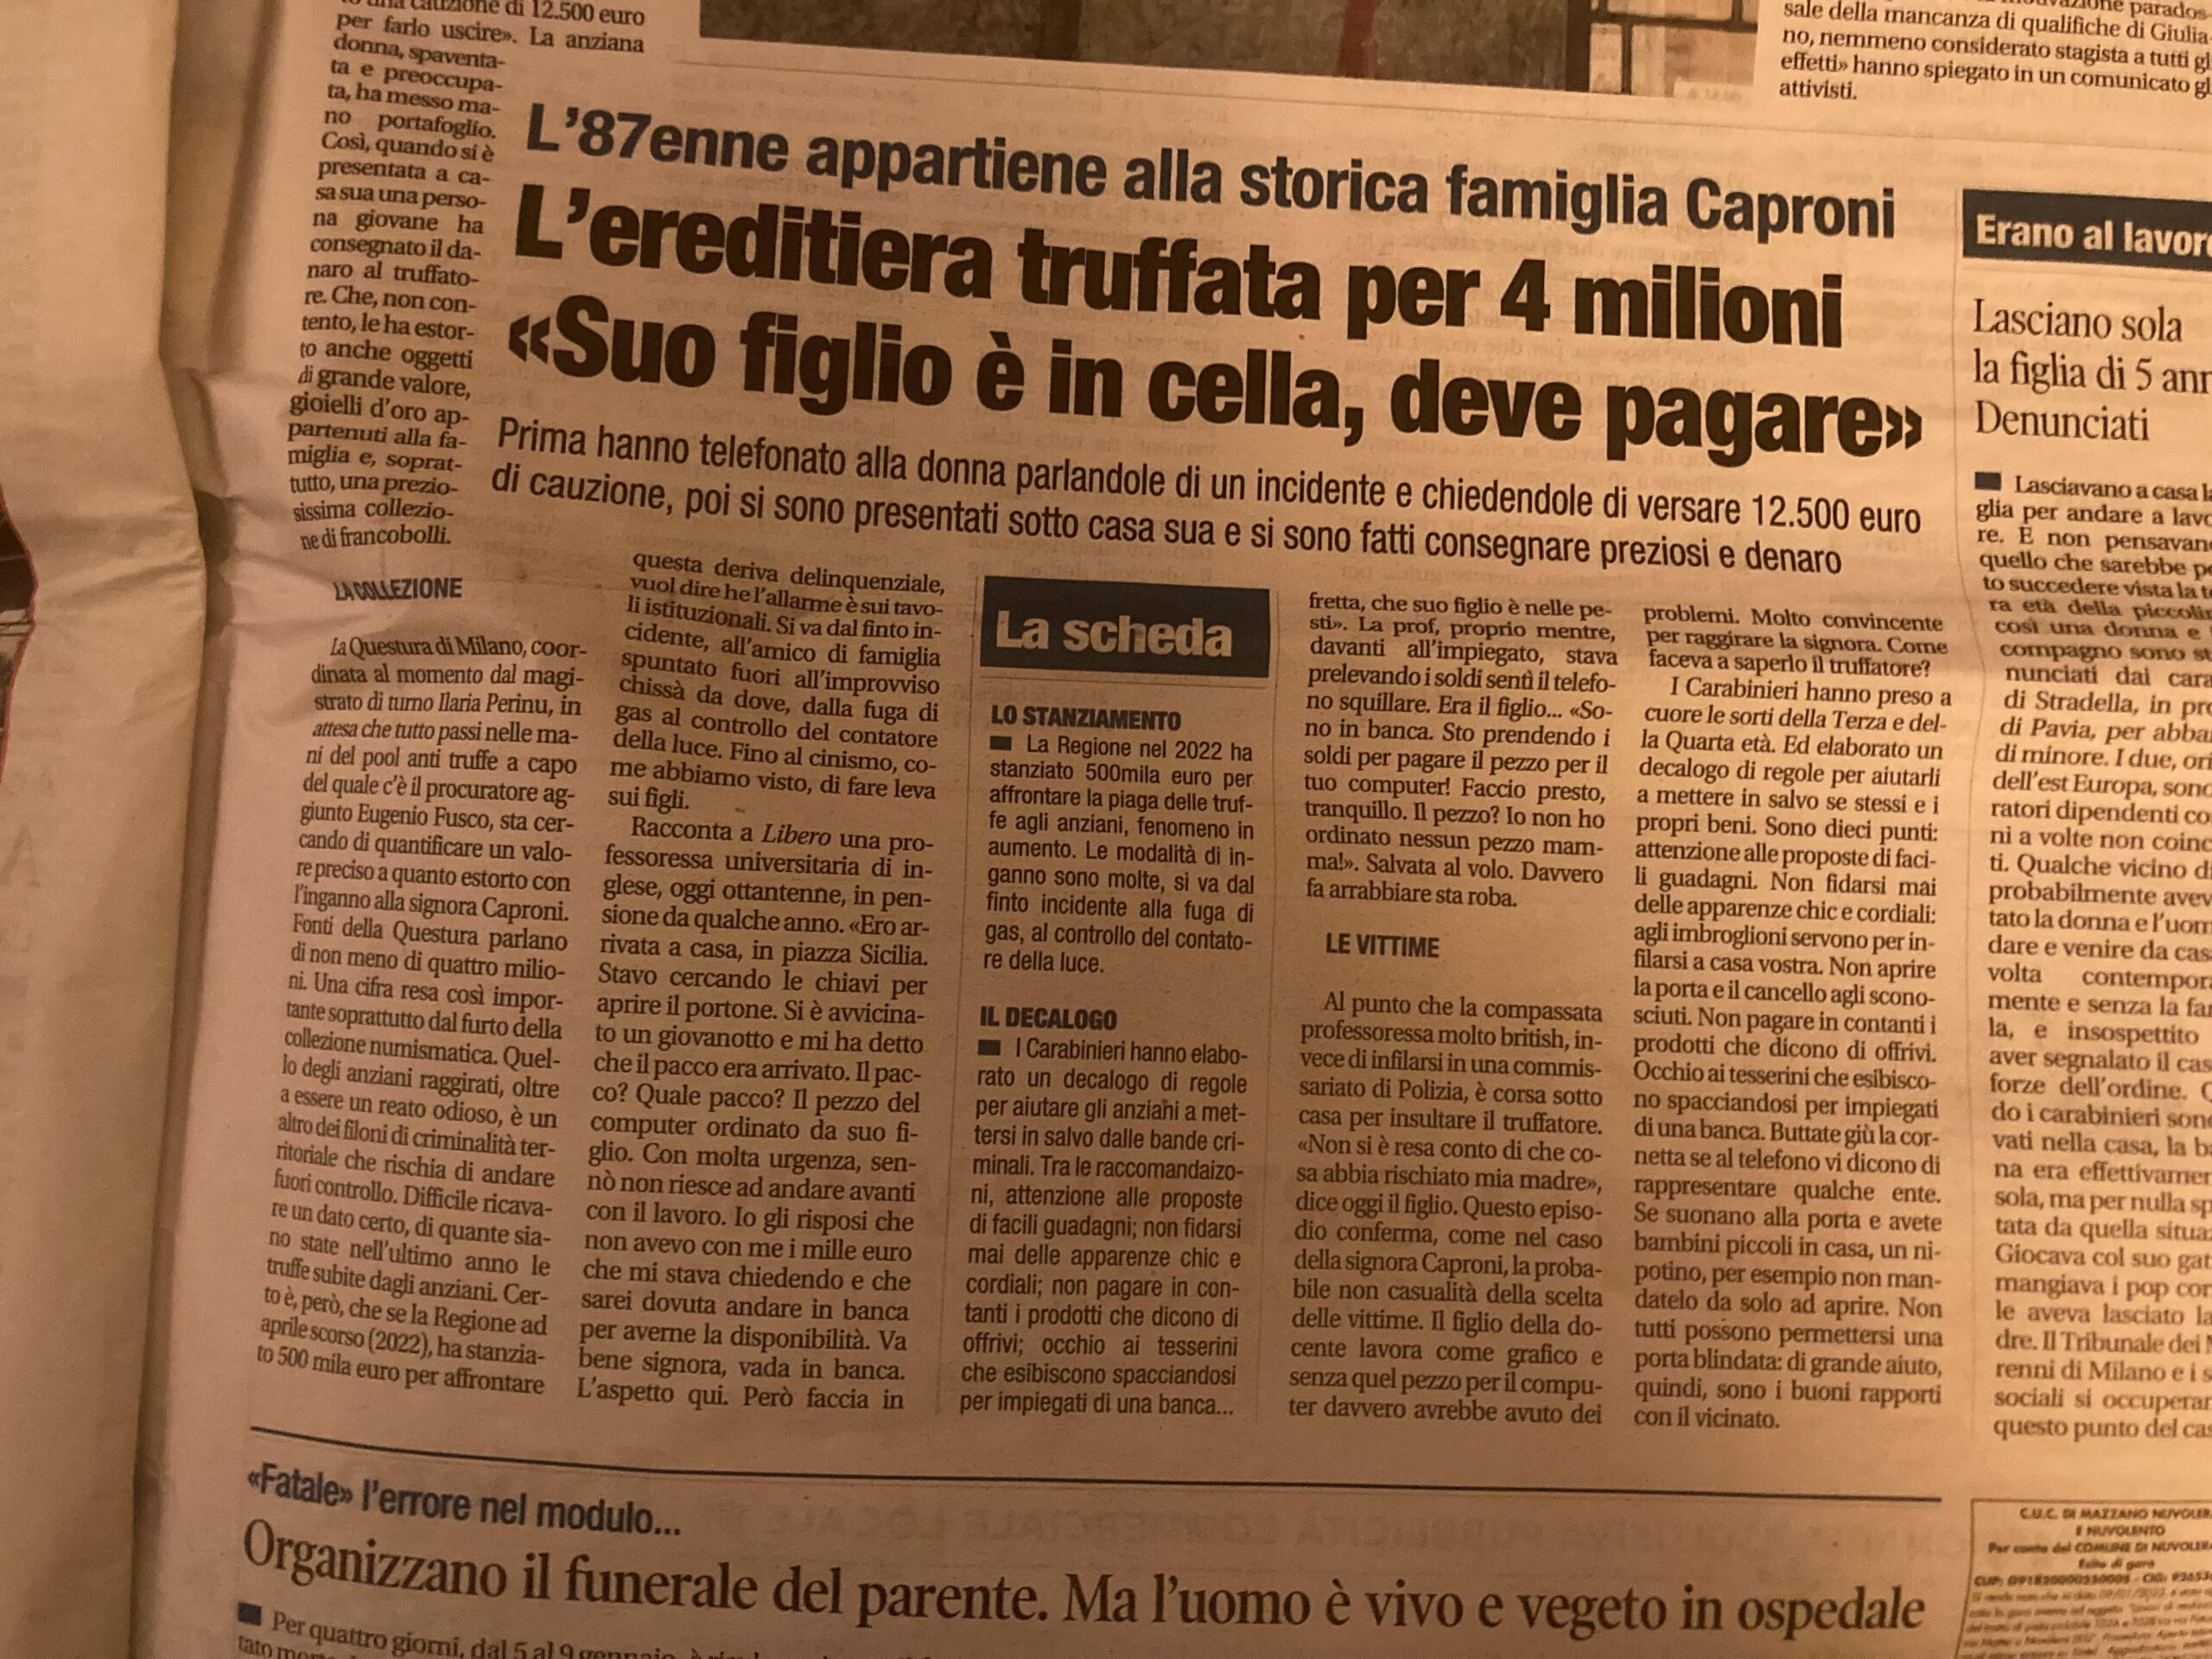 Ereditiera Caproni truffata per 4 milioni. Martedì 17 geaanio 2023